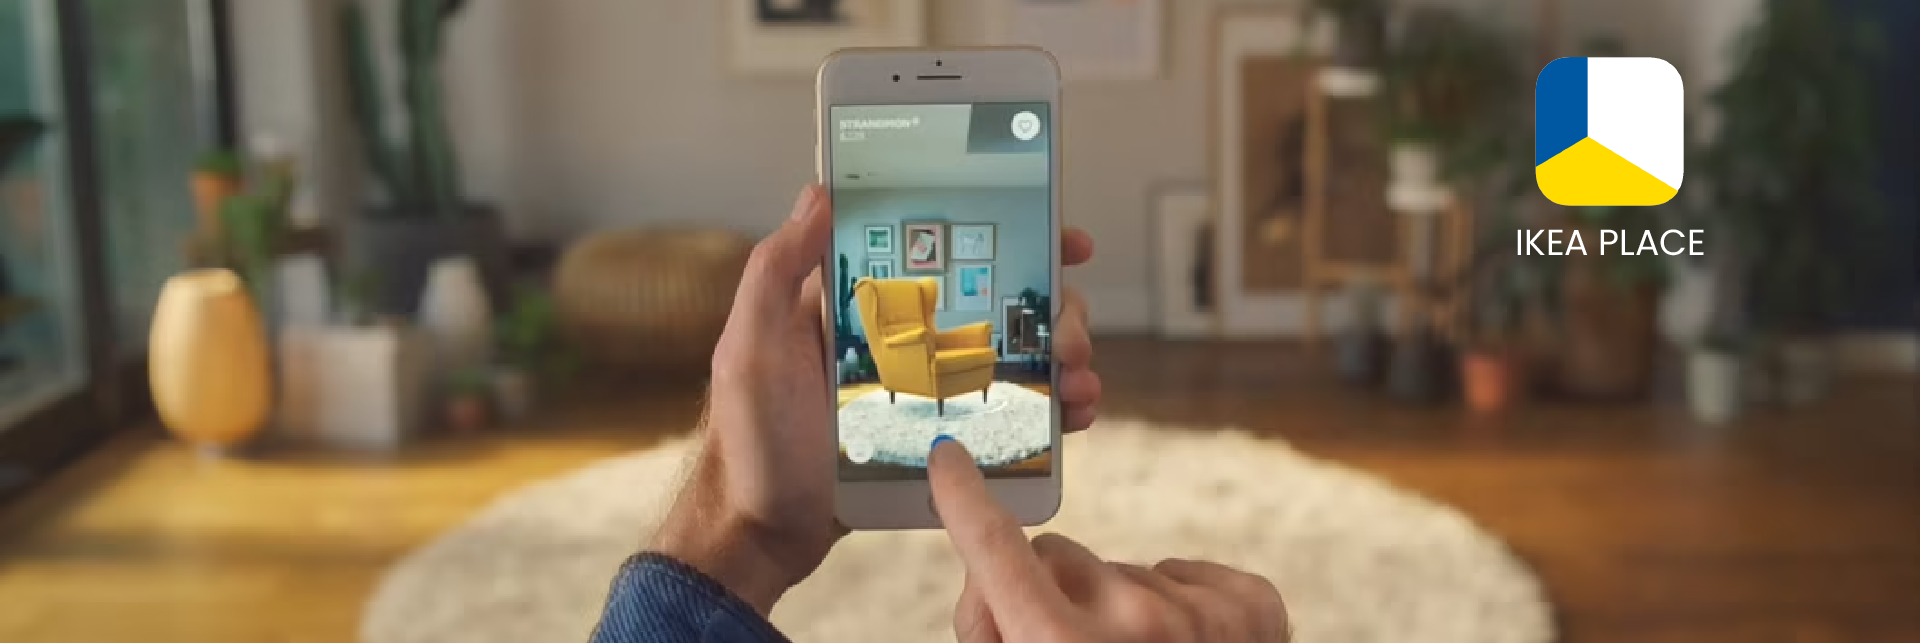 alt="man choosing furniture through virtual reality"